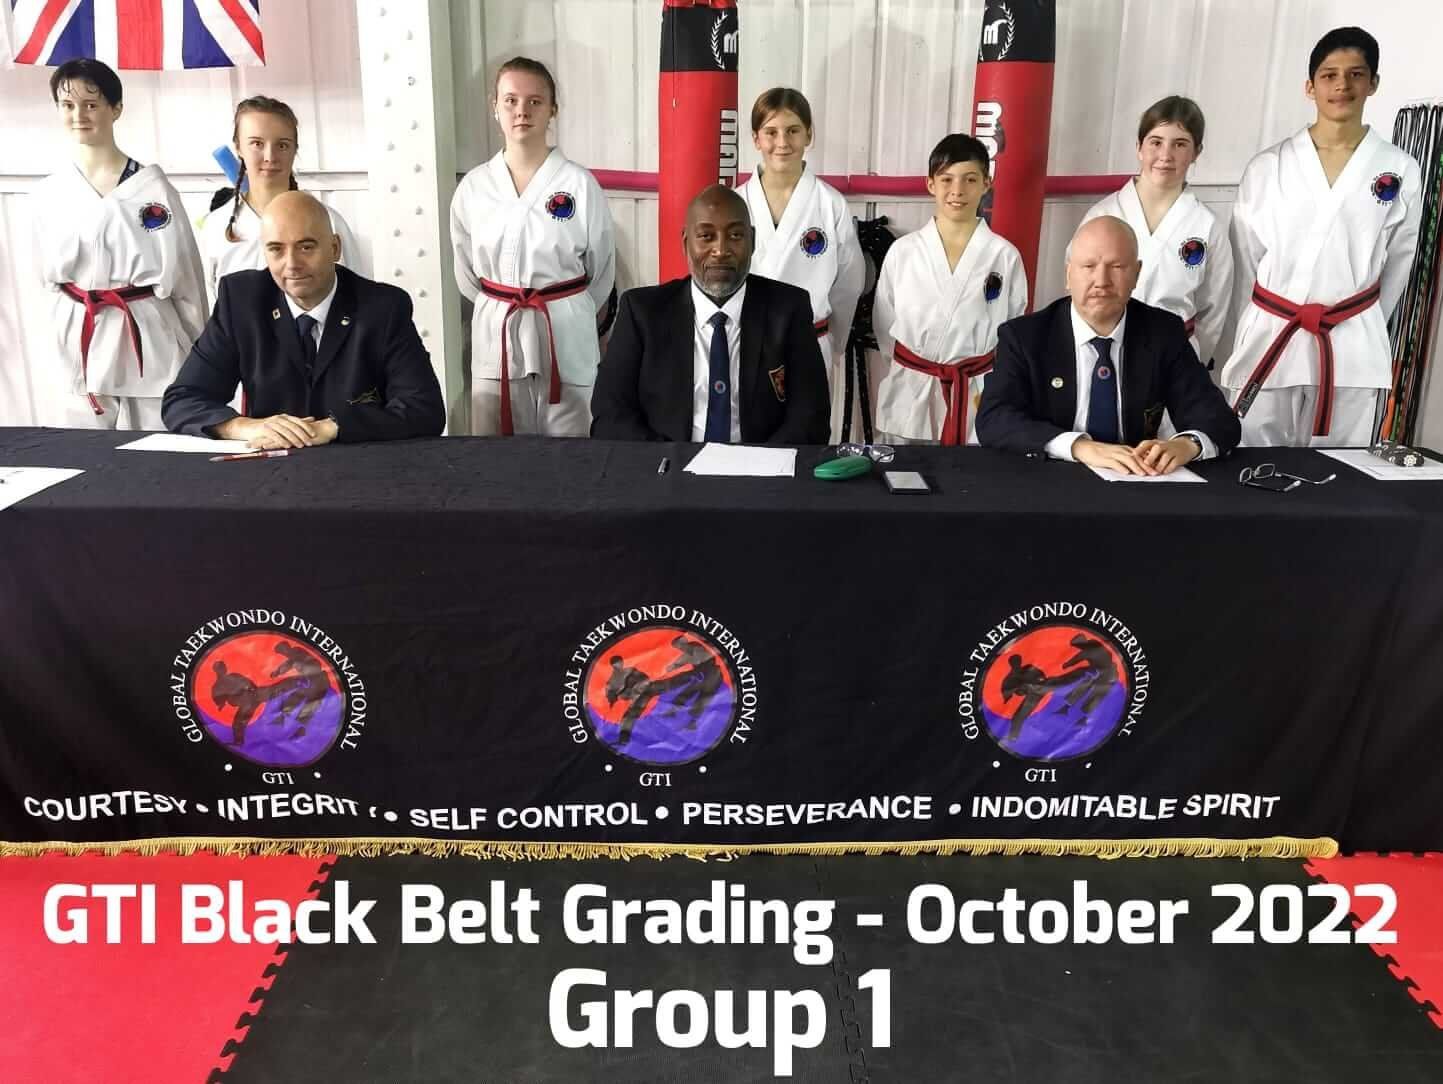 Black belt grading 9th Oct. 2022 Group 1